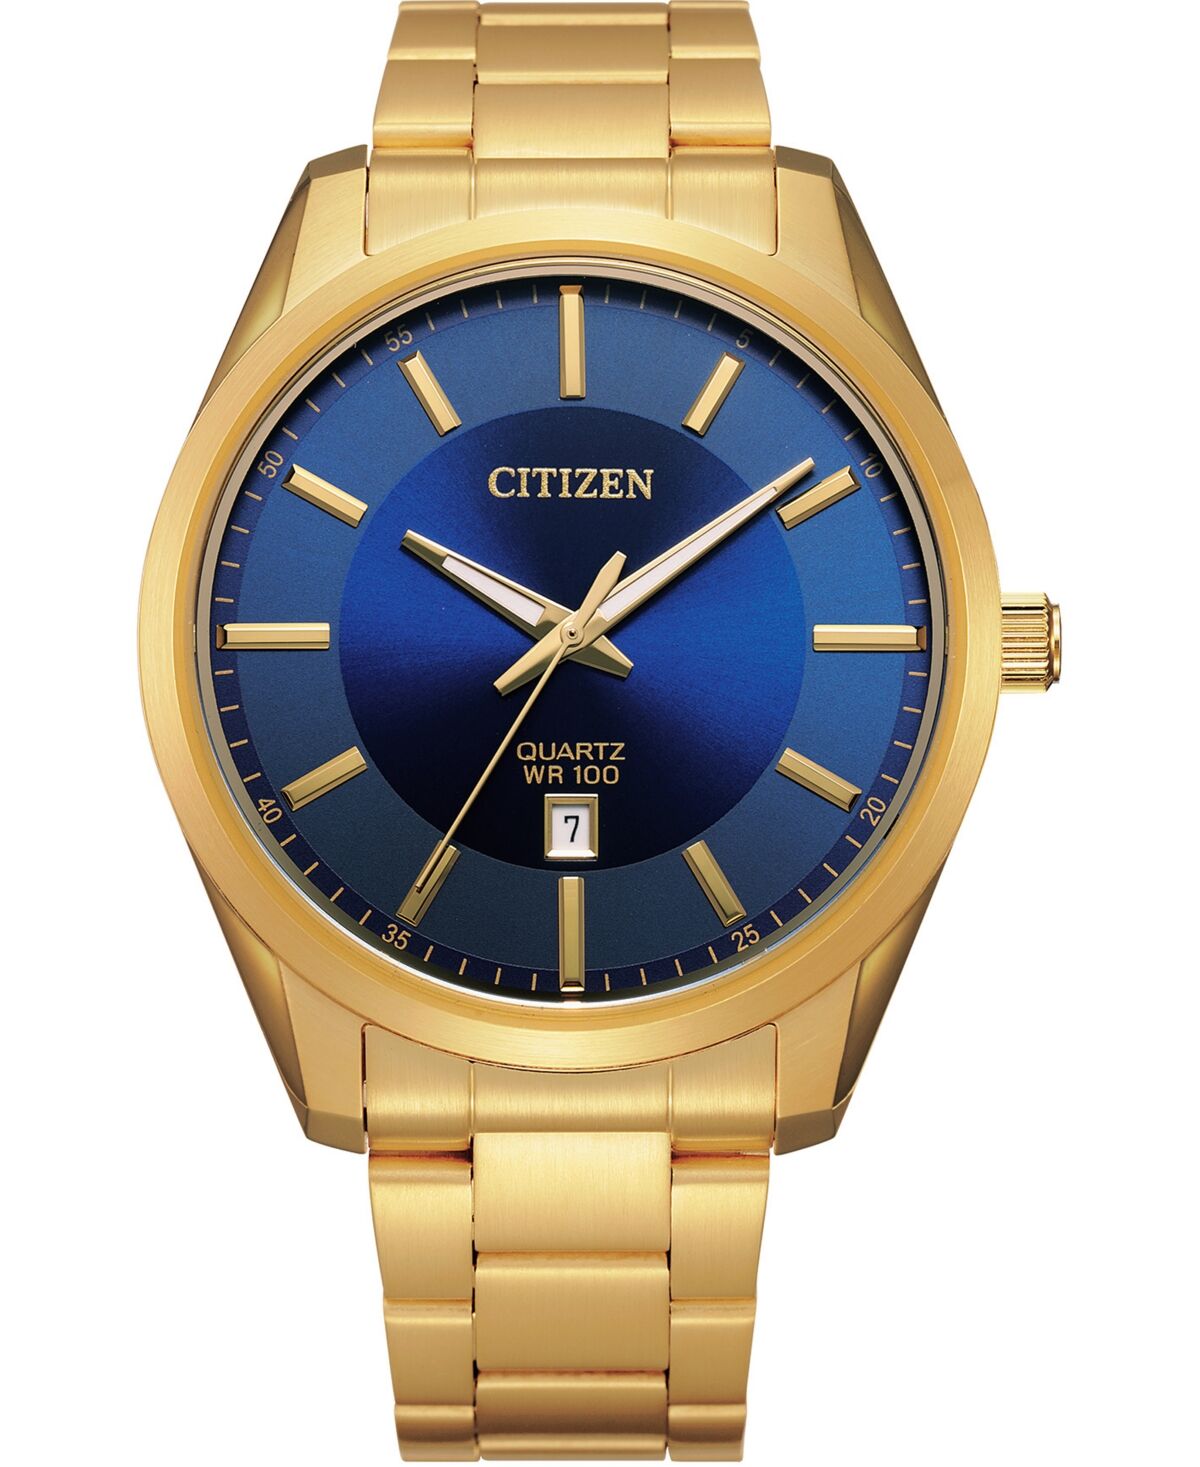 Citizen Men's Quartz Gold-Tone Stainless Steel Bracelet Watch 42mm - Gold